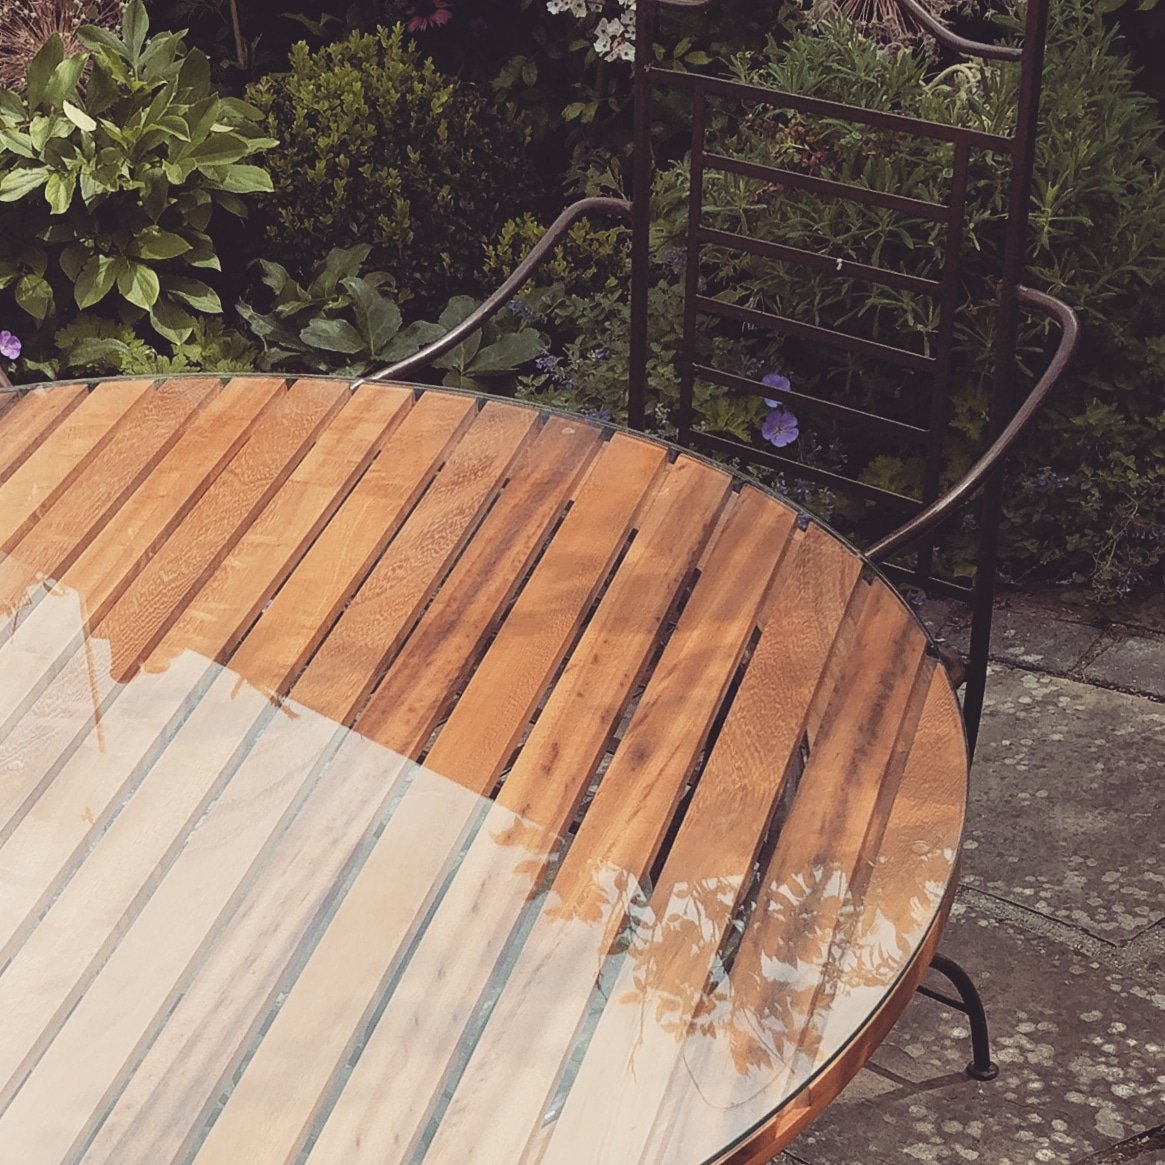 IROKO // CUSTOM // TABLE TOP shot of the #iroko #tabletop by #graftin in #arundel #furniture #furnituredesign #commision #custom #outdoor #outdoorfurniture #design #garden #gardenfurniture